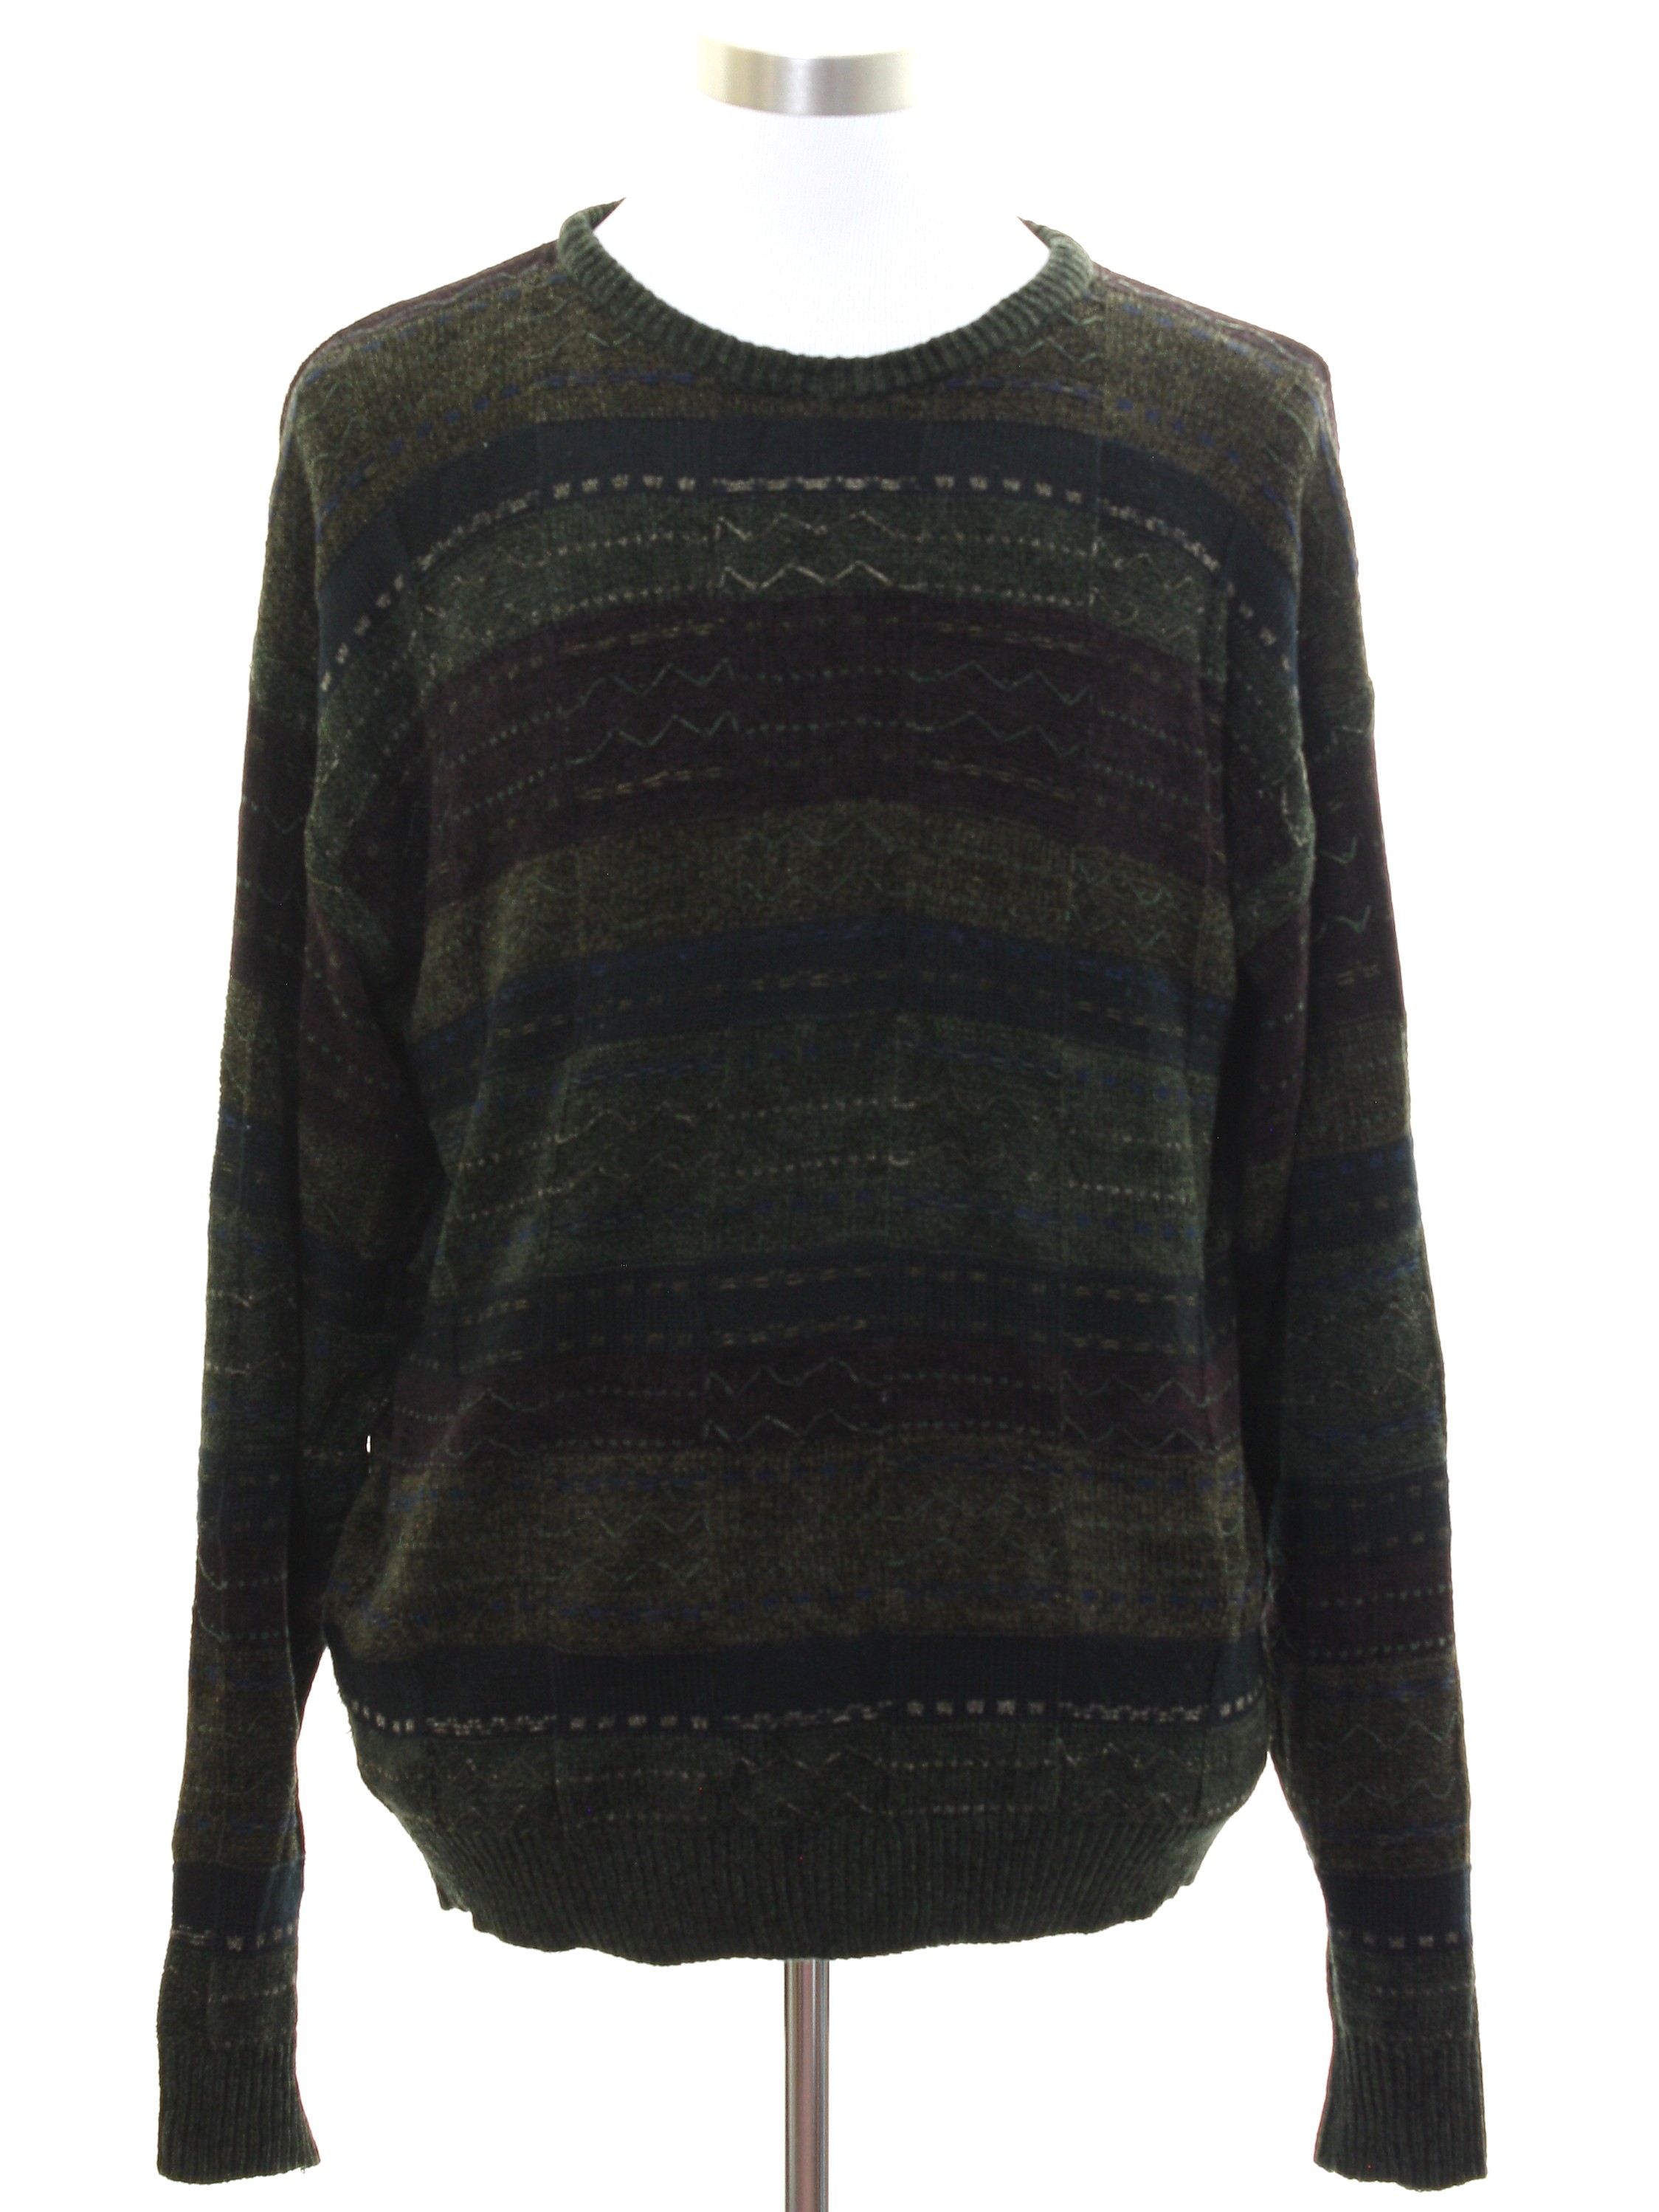 Retro Nineties Sweater: 90s -Consensus Sportswear- Mens olive green background acrylic nylon ...